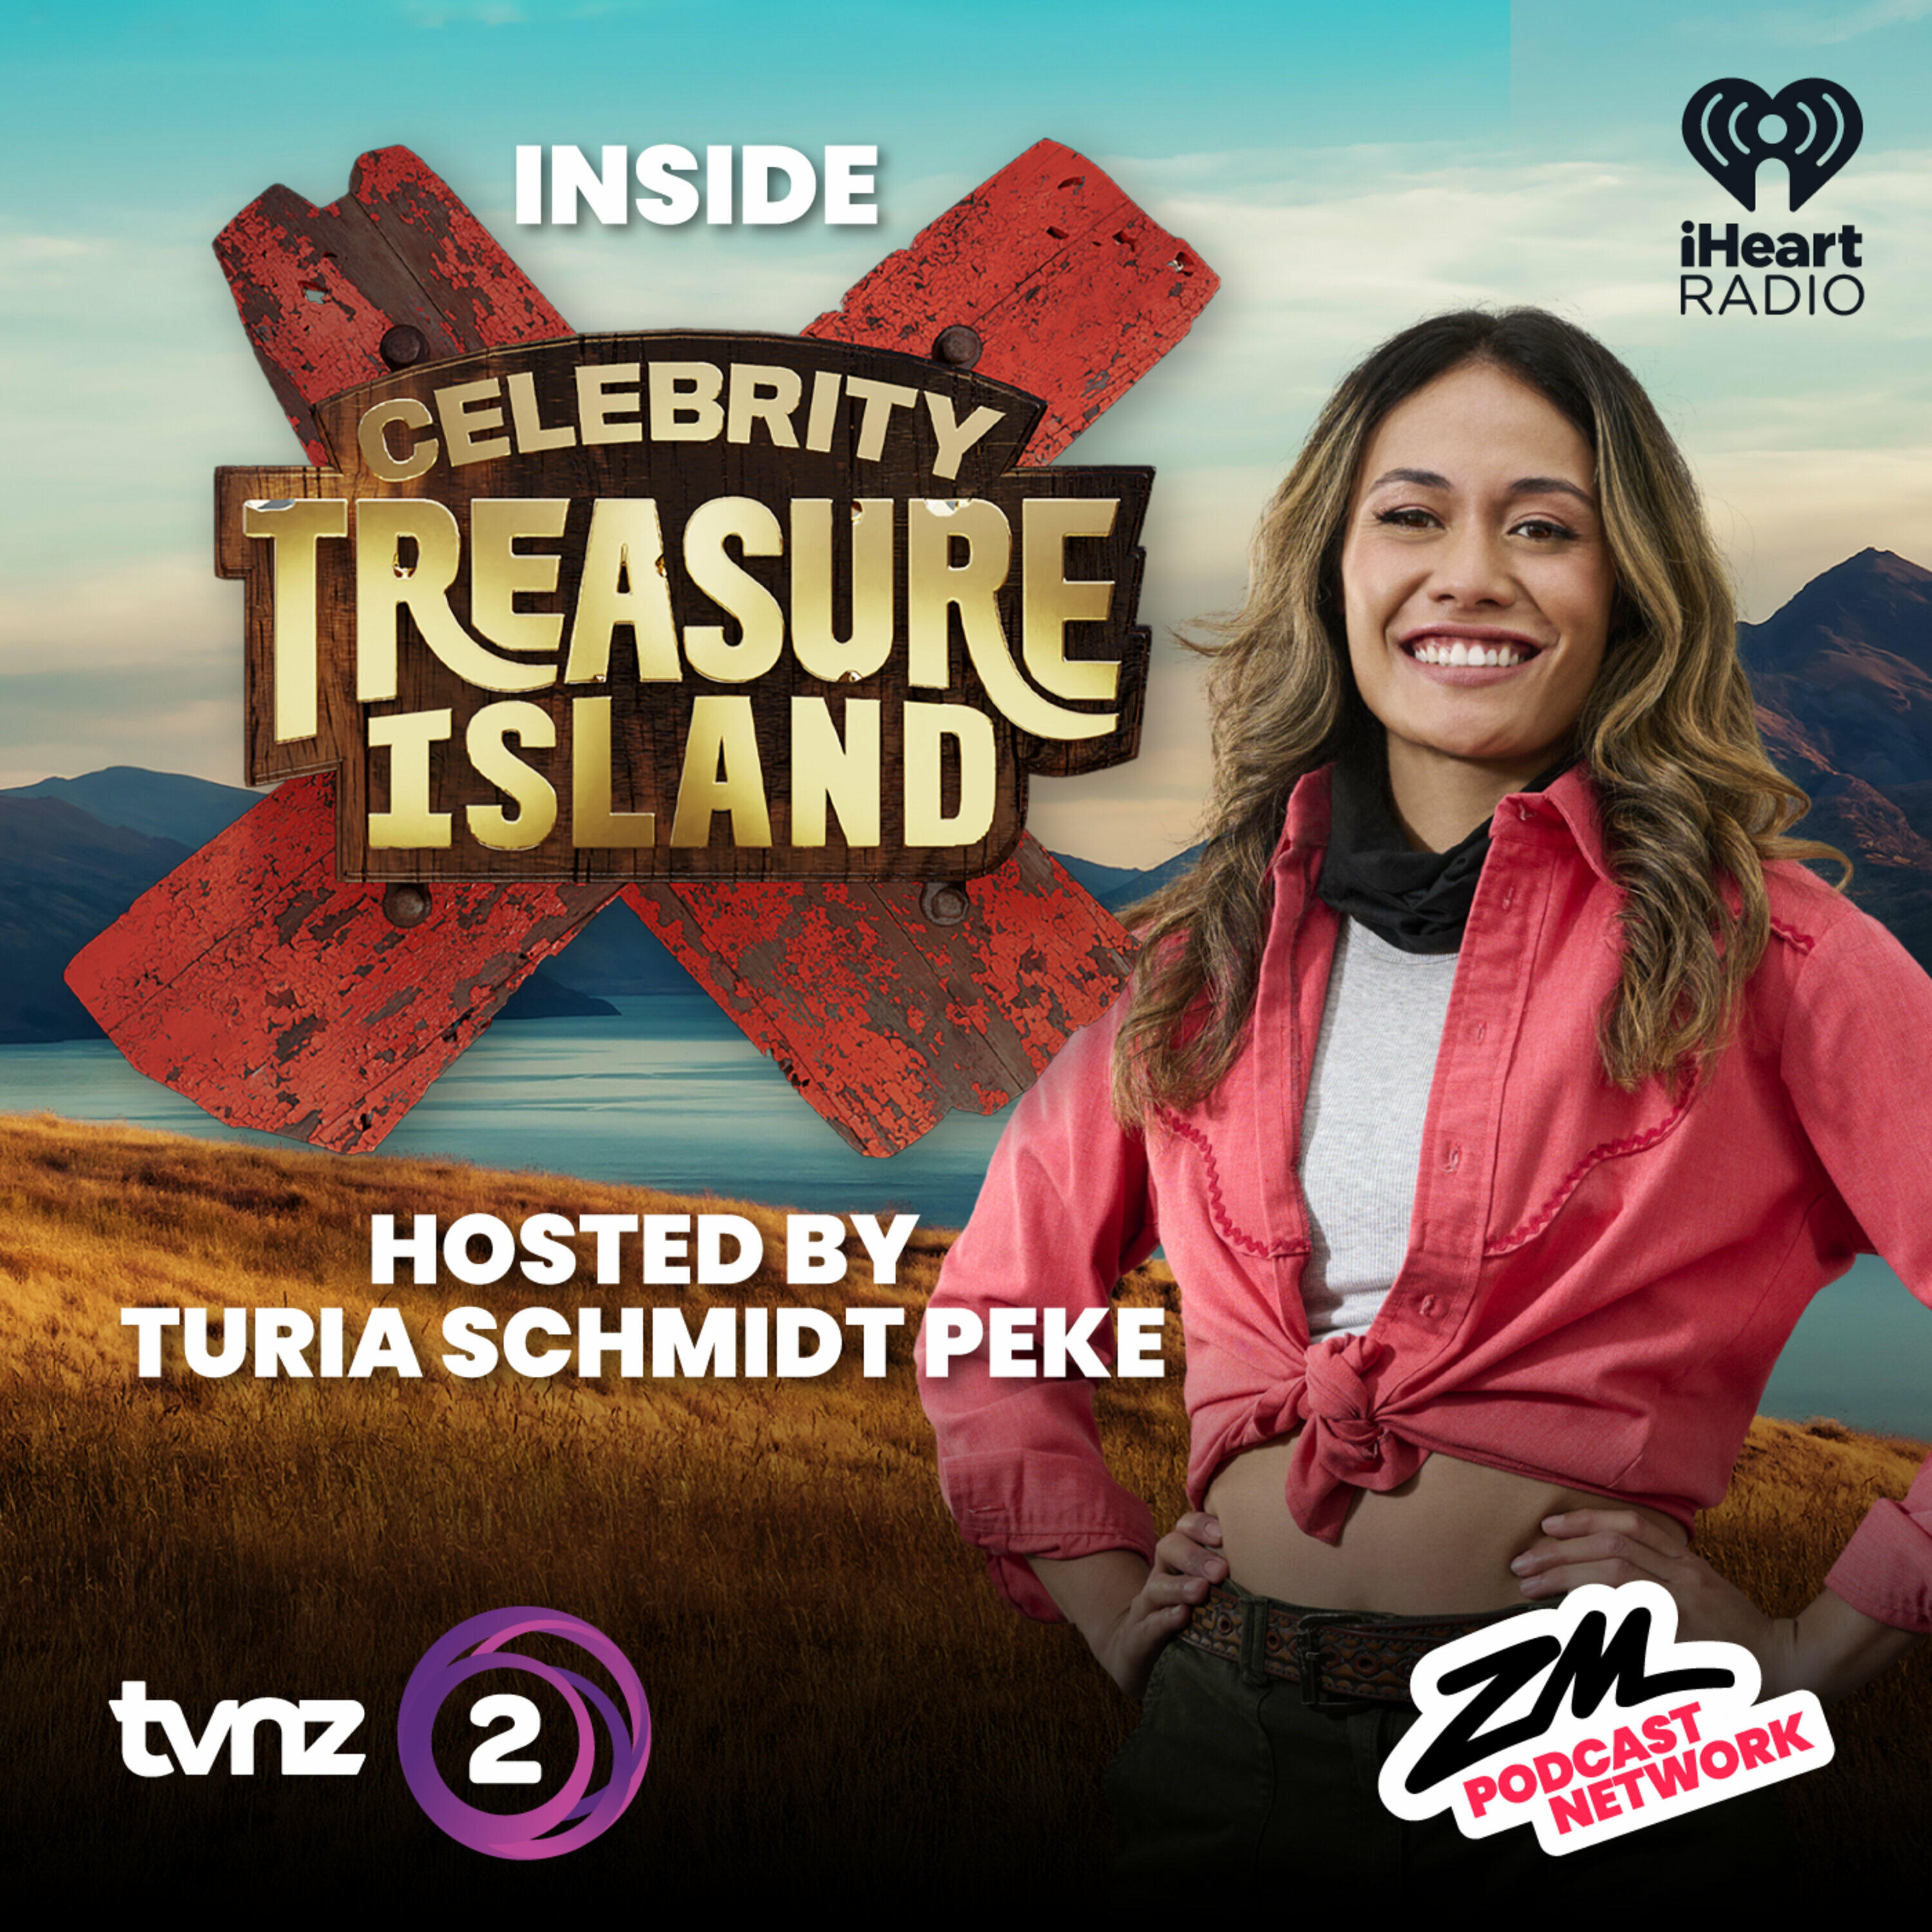 Inside Celebrity Treasure Island iHeart